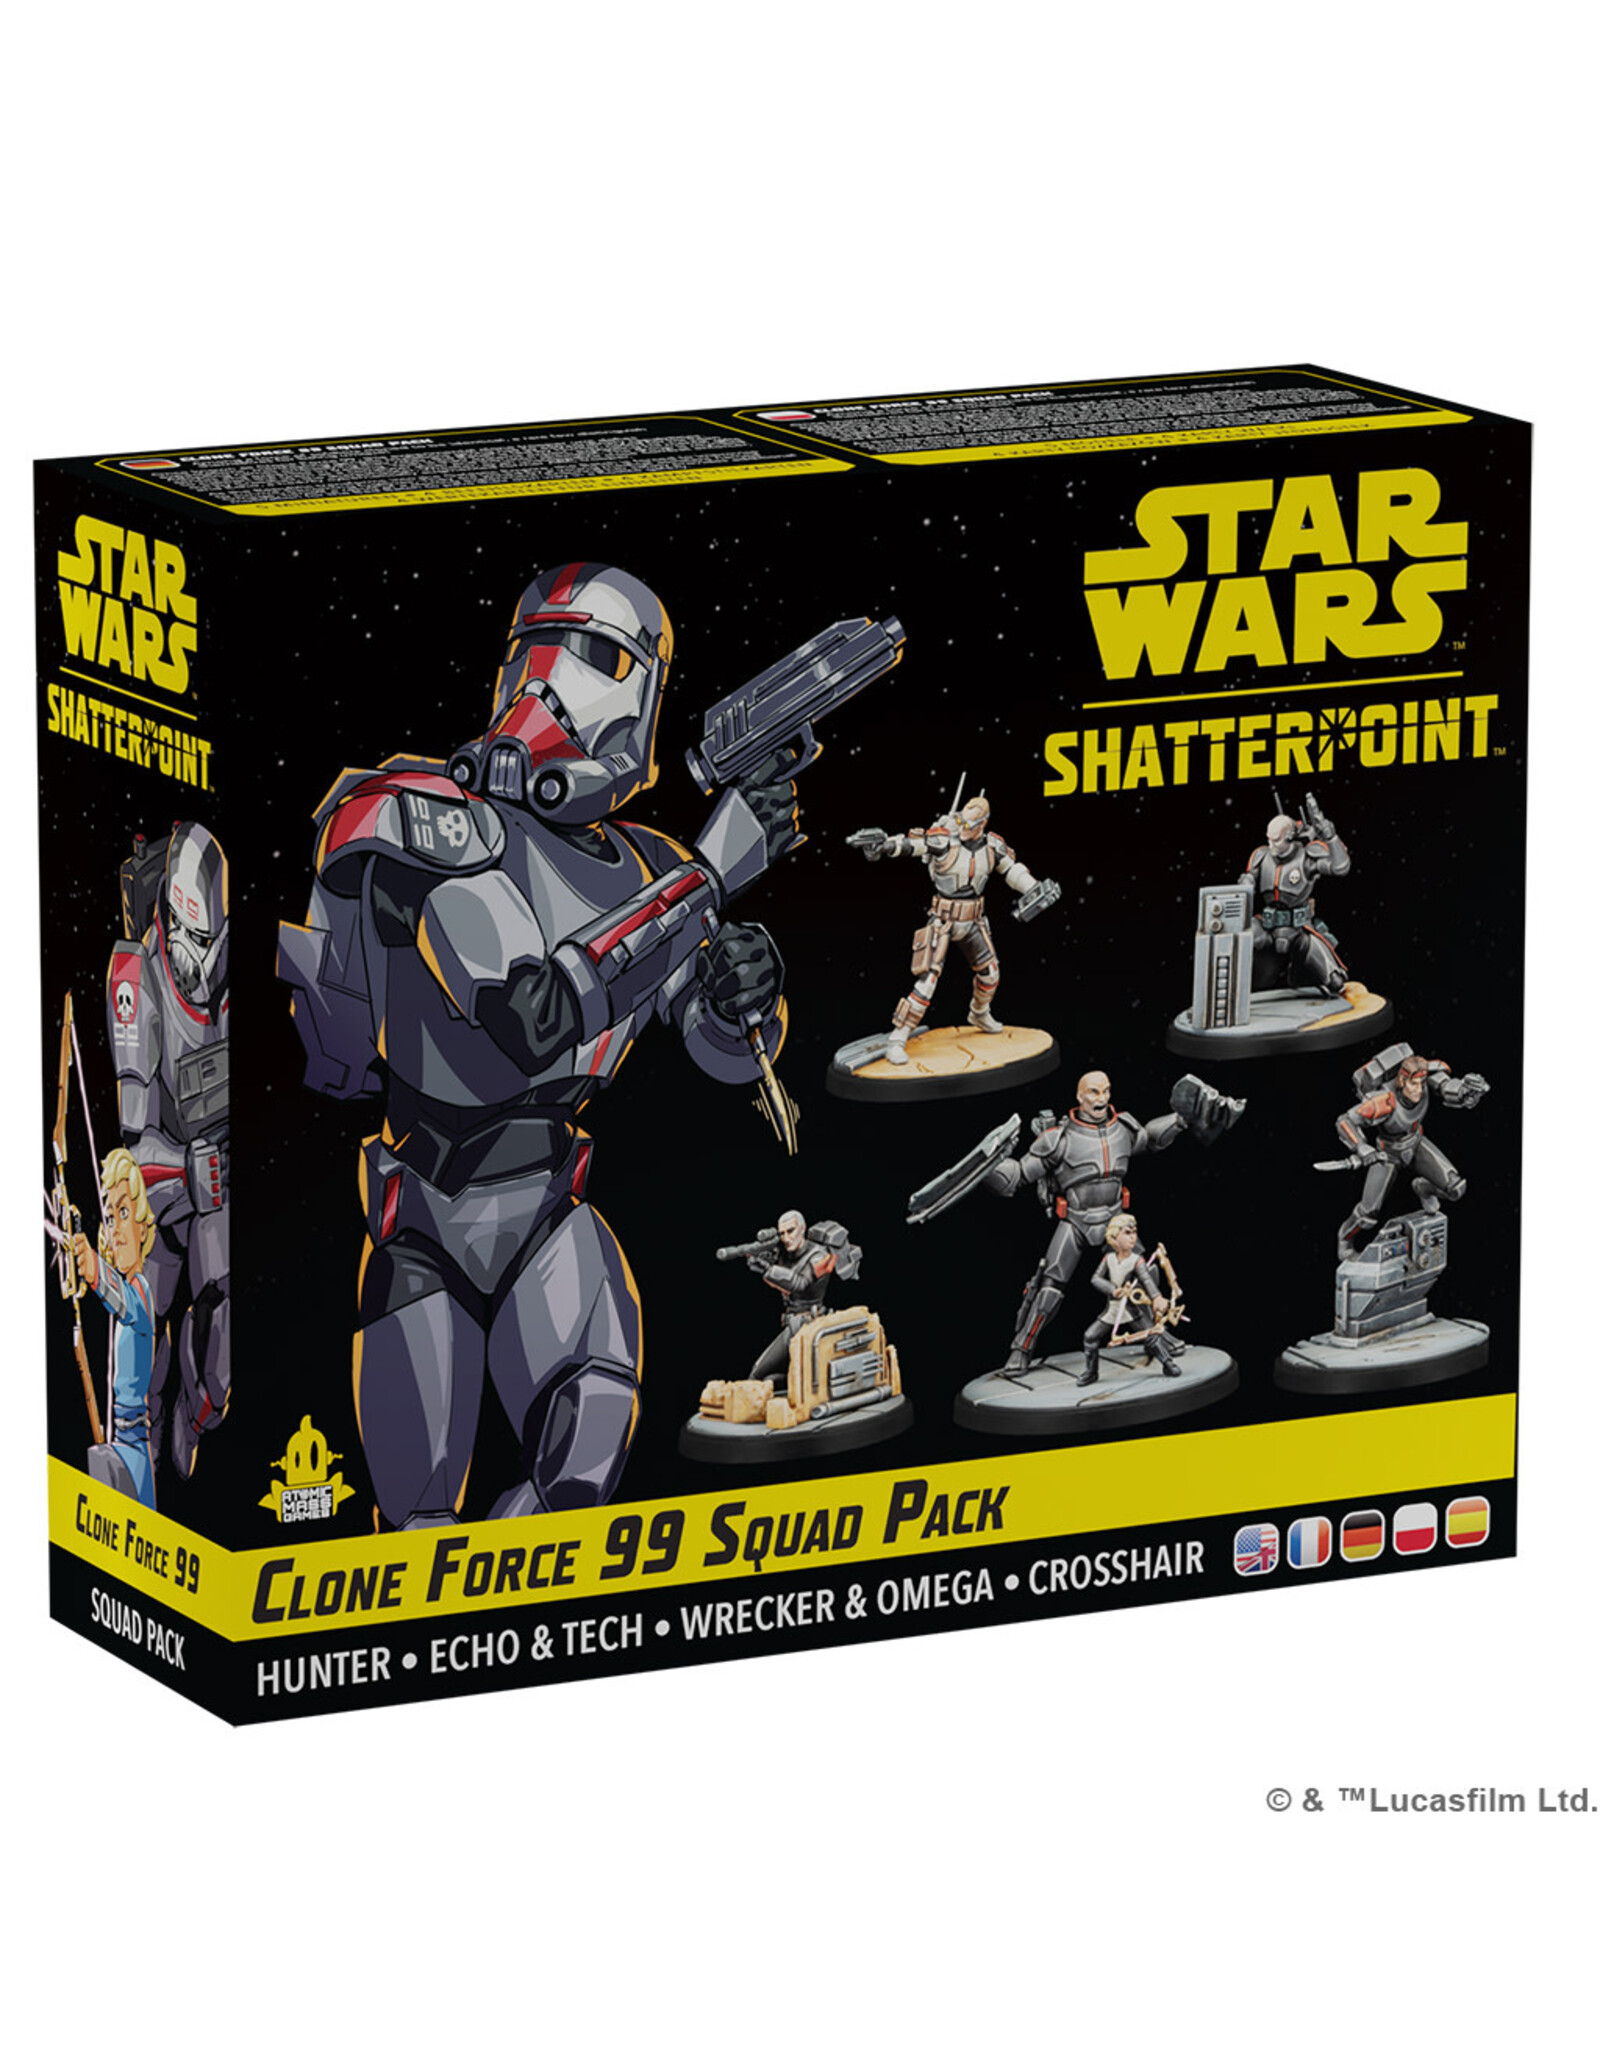 Star Wars Shatterpoint Star Wars Shatterpoint  Clone Force 99 Squad Pack